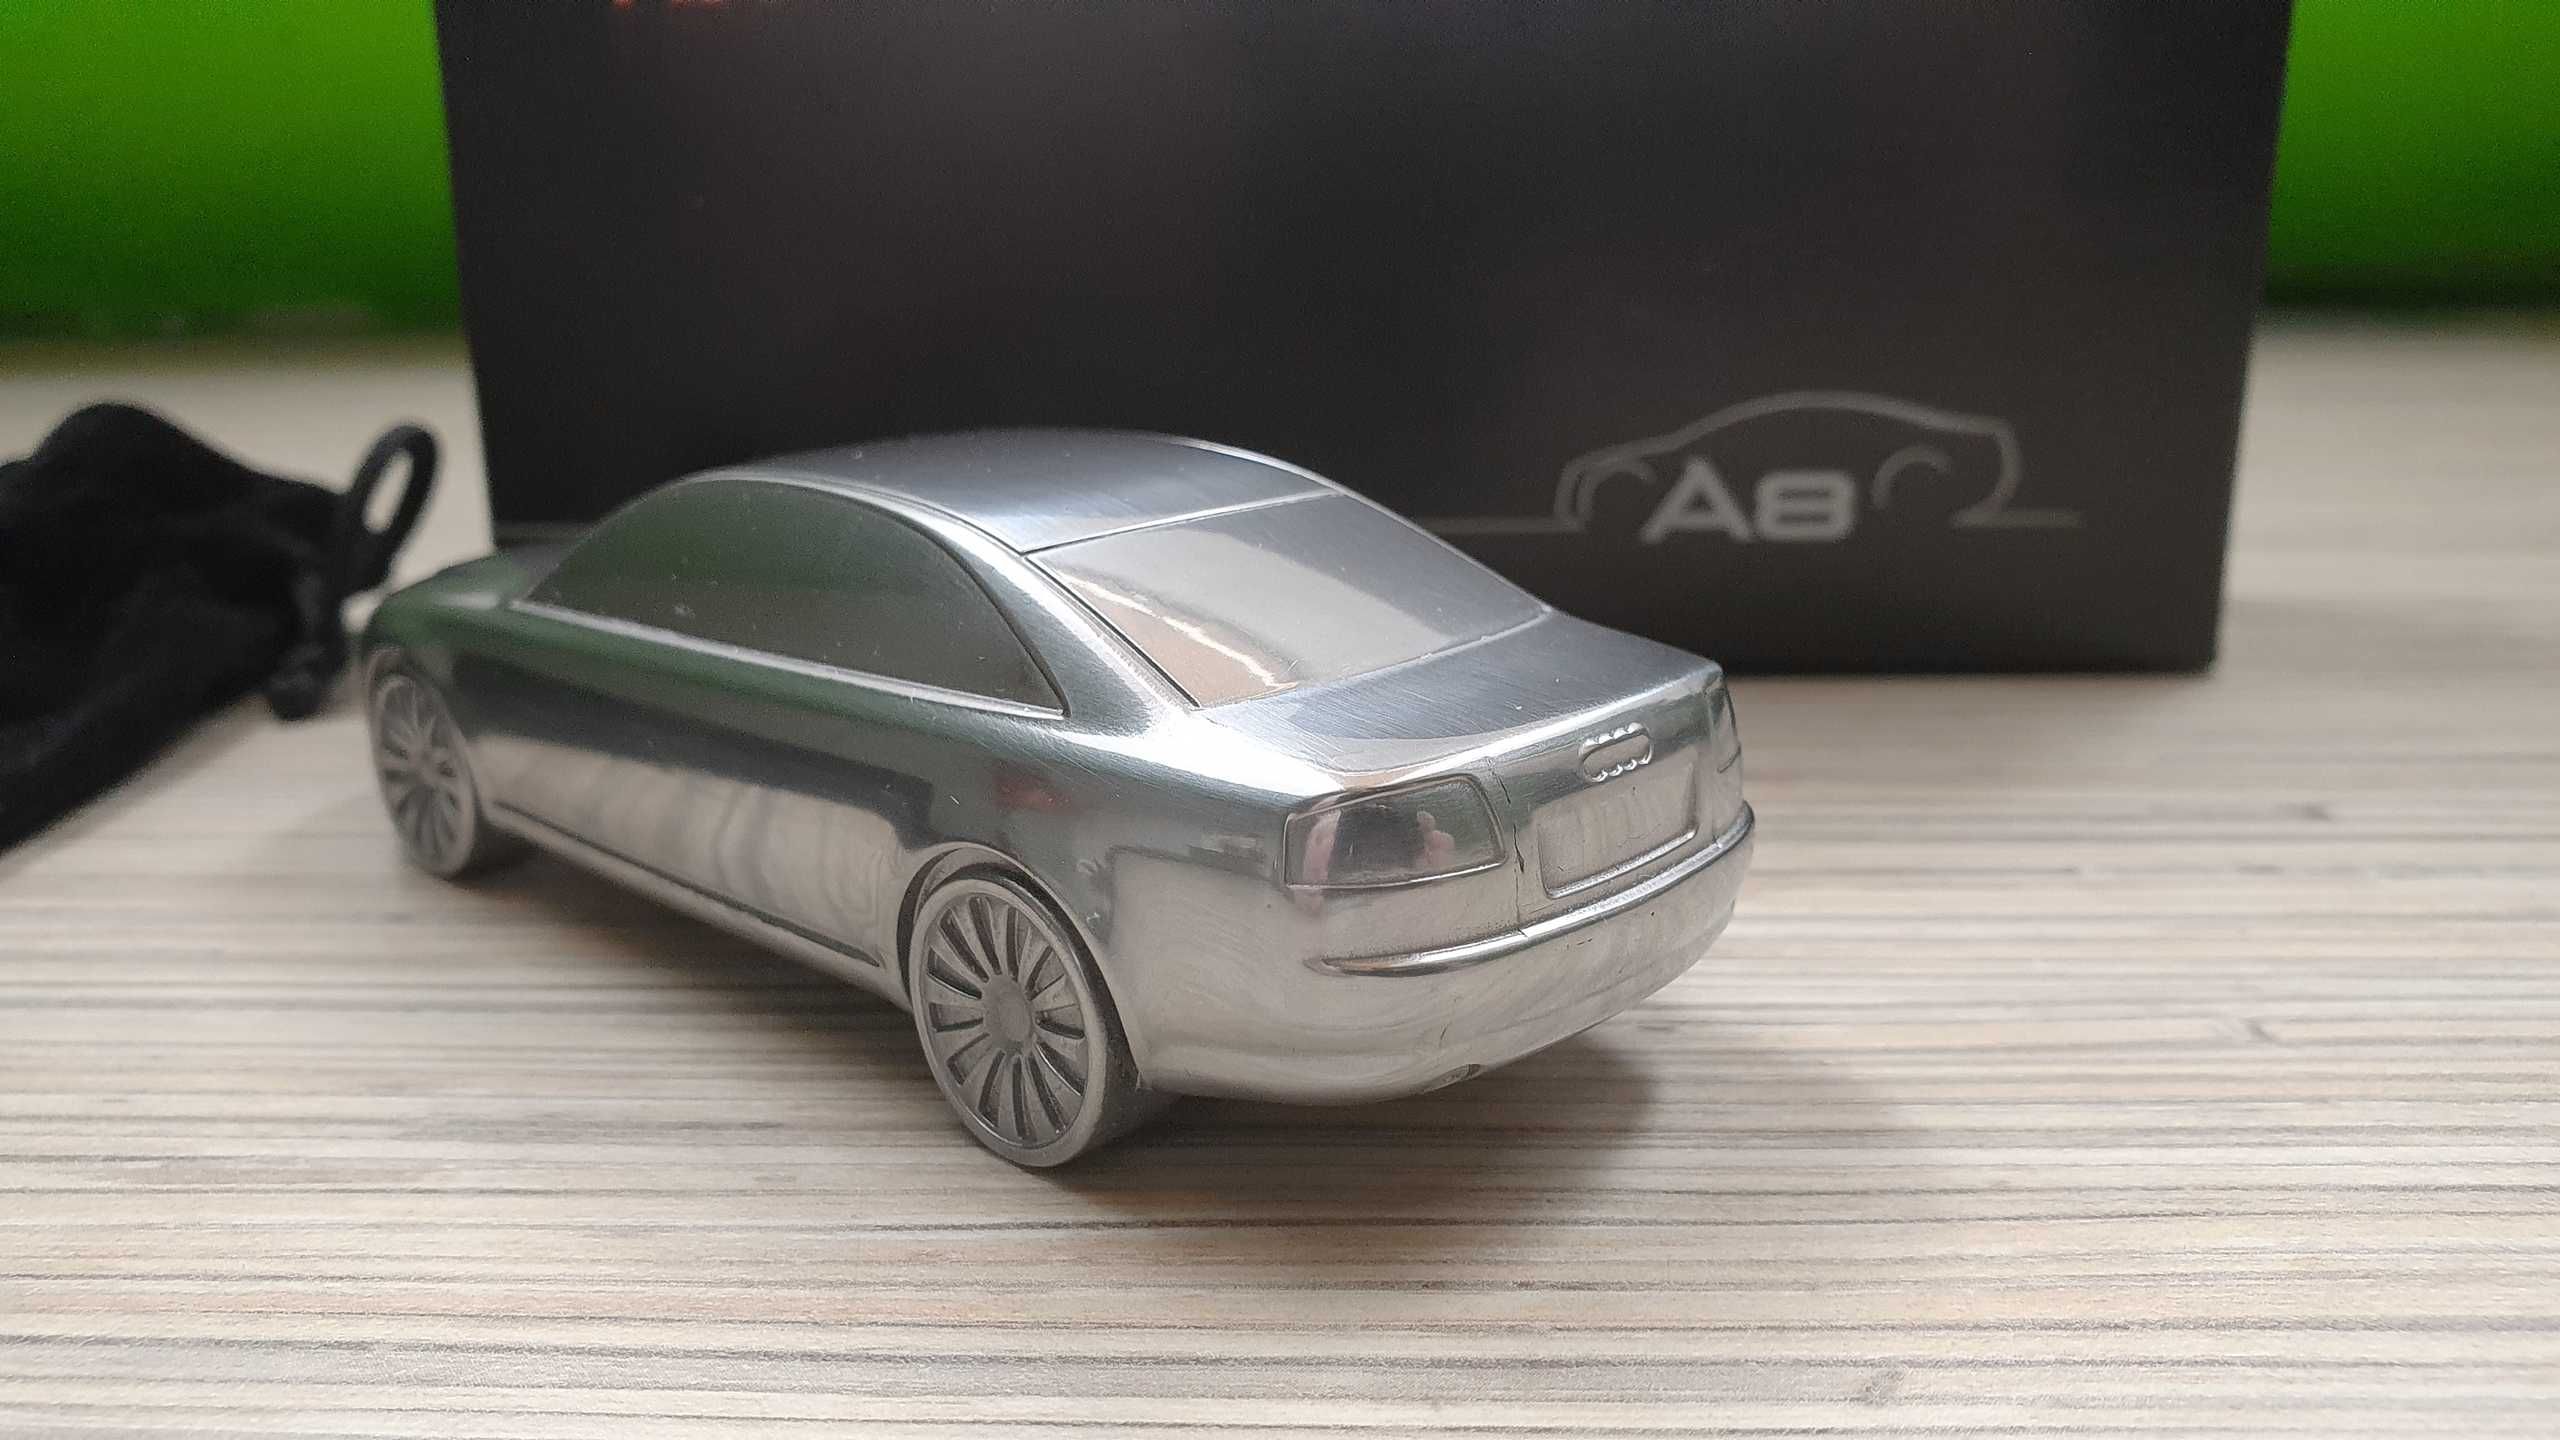 Audi A8 | aluminiowy przycisk do papieru | Audi design